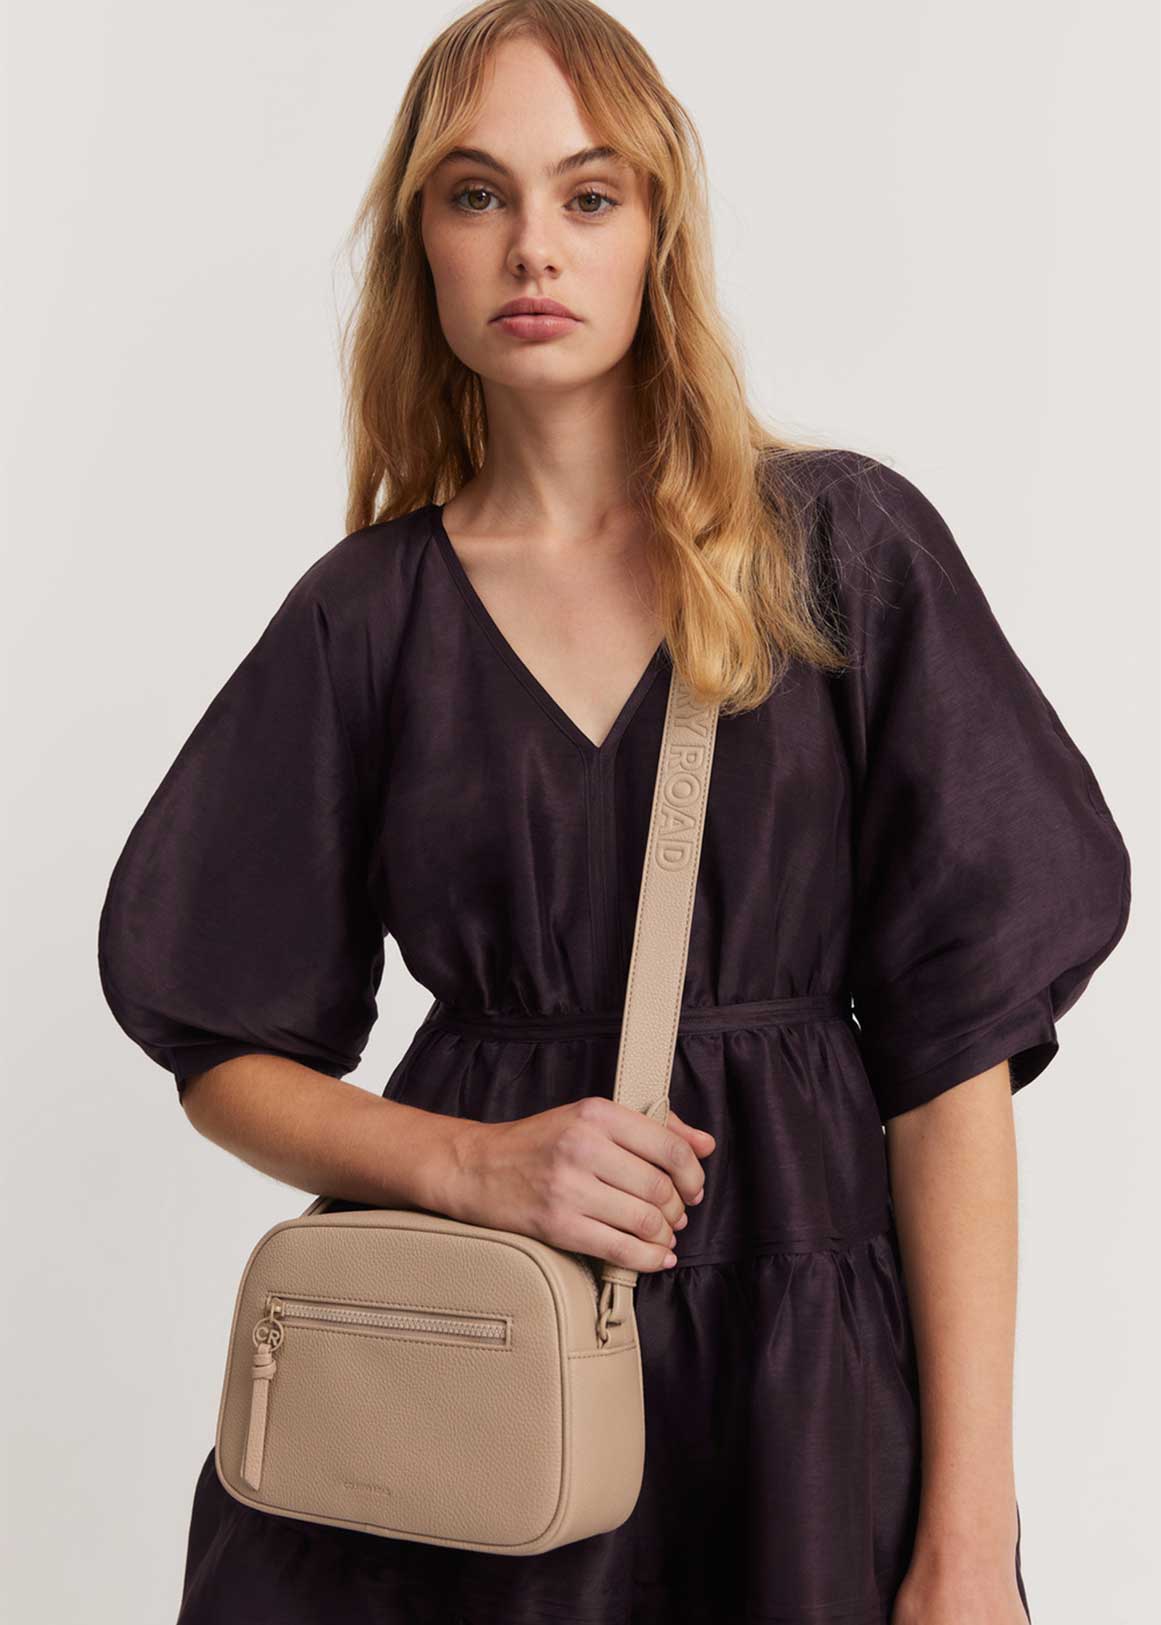 Ladies COUNTRY ROAD duffel travel over night style handbag bag | eBay